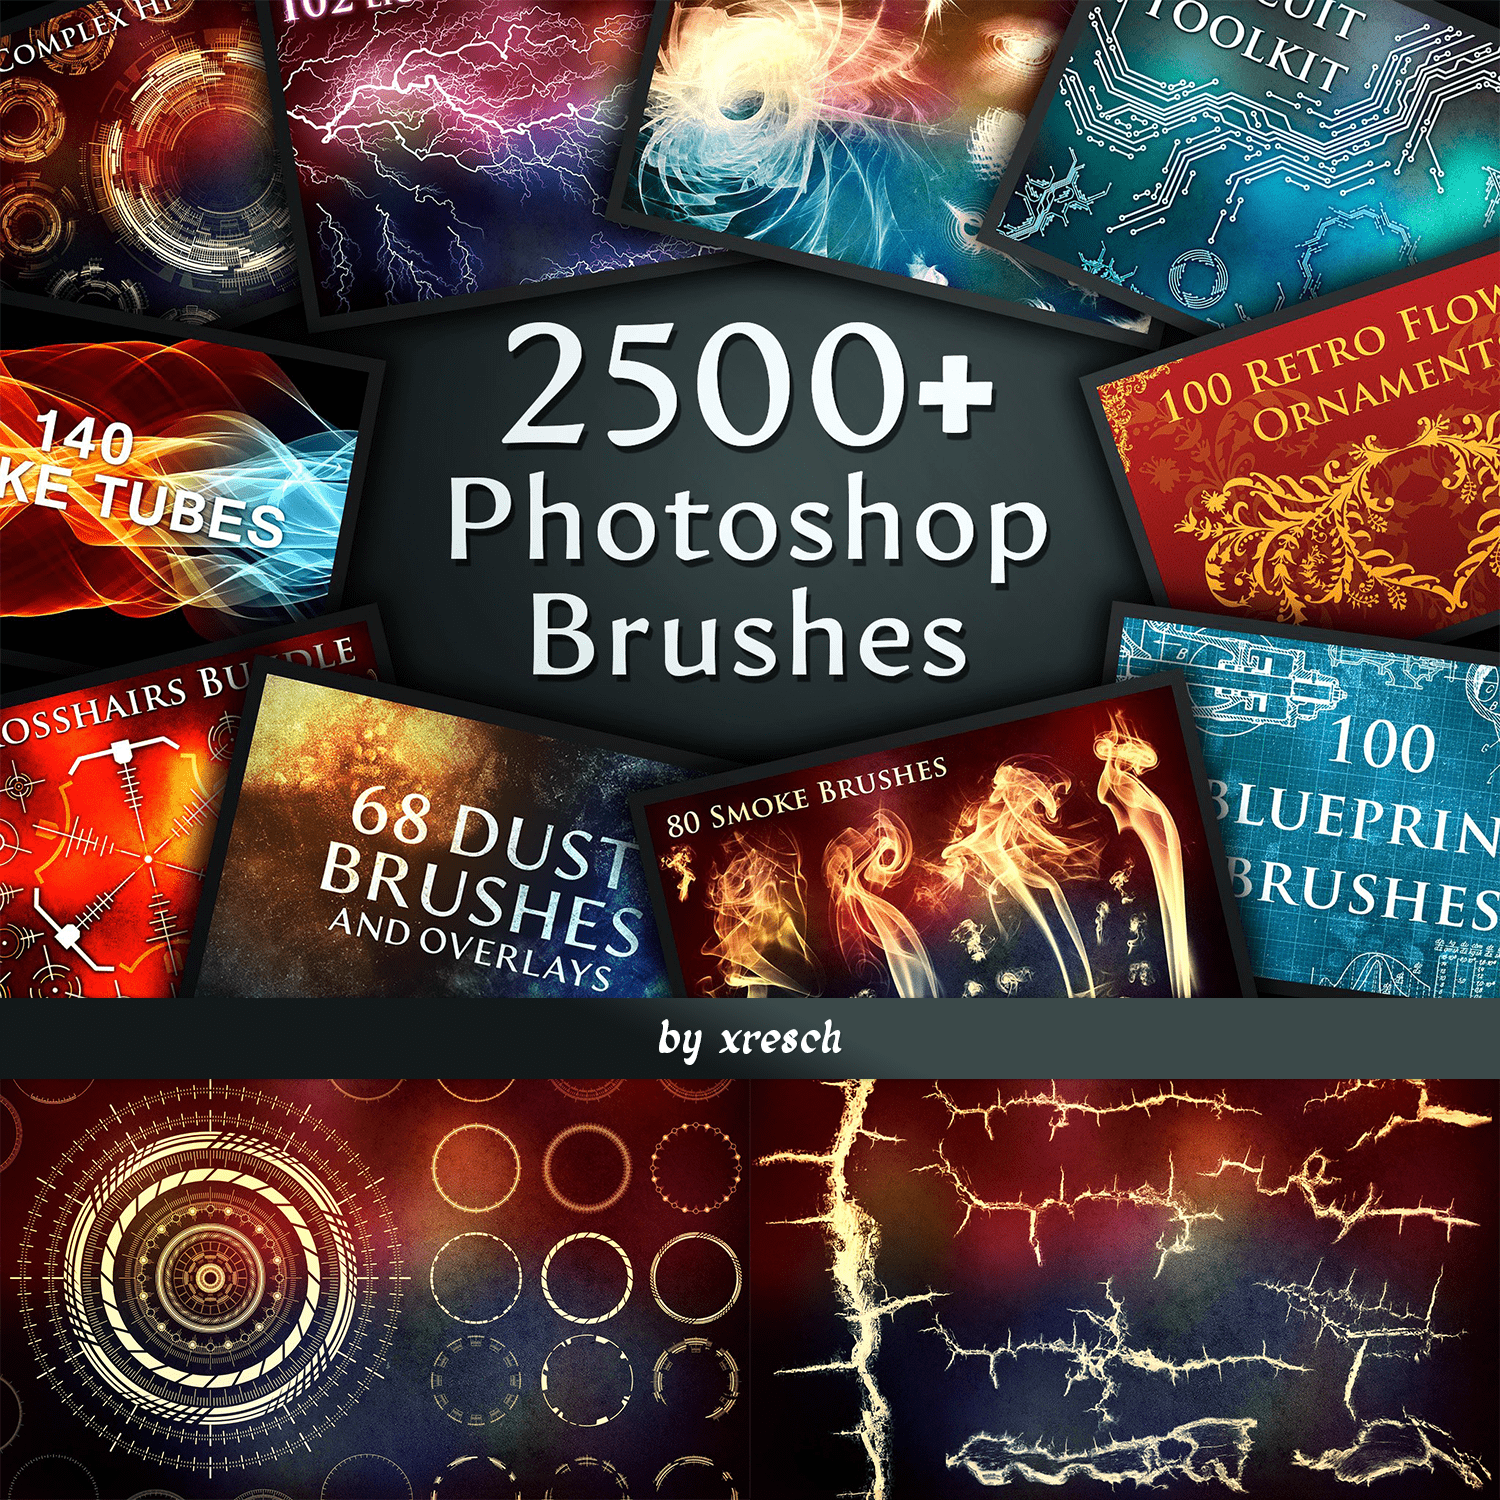 2500+ Photoshop Brushes cover.